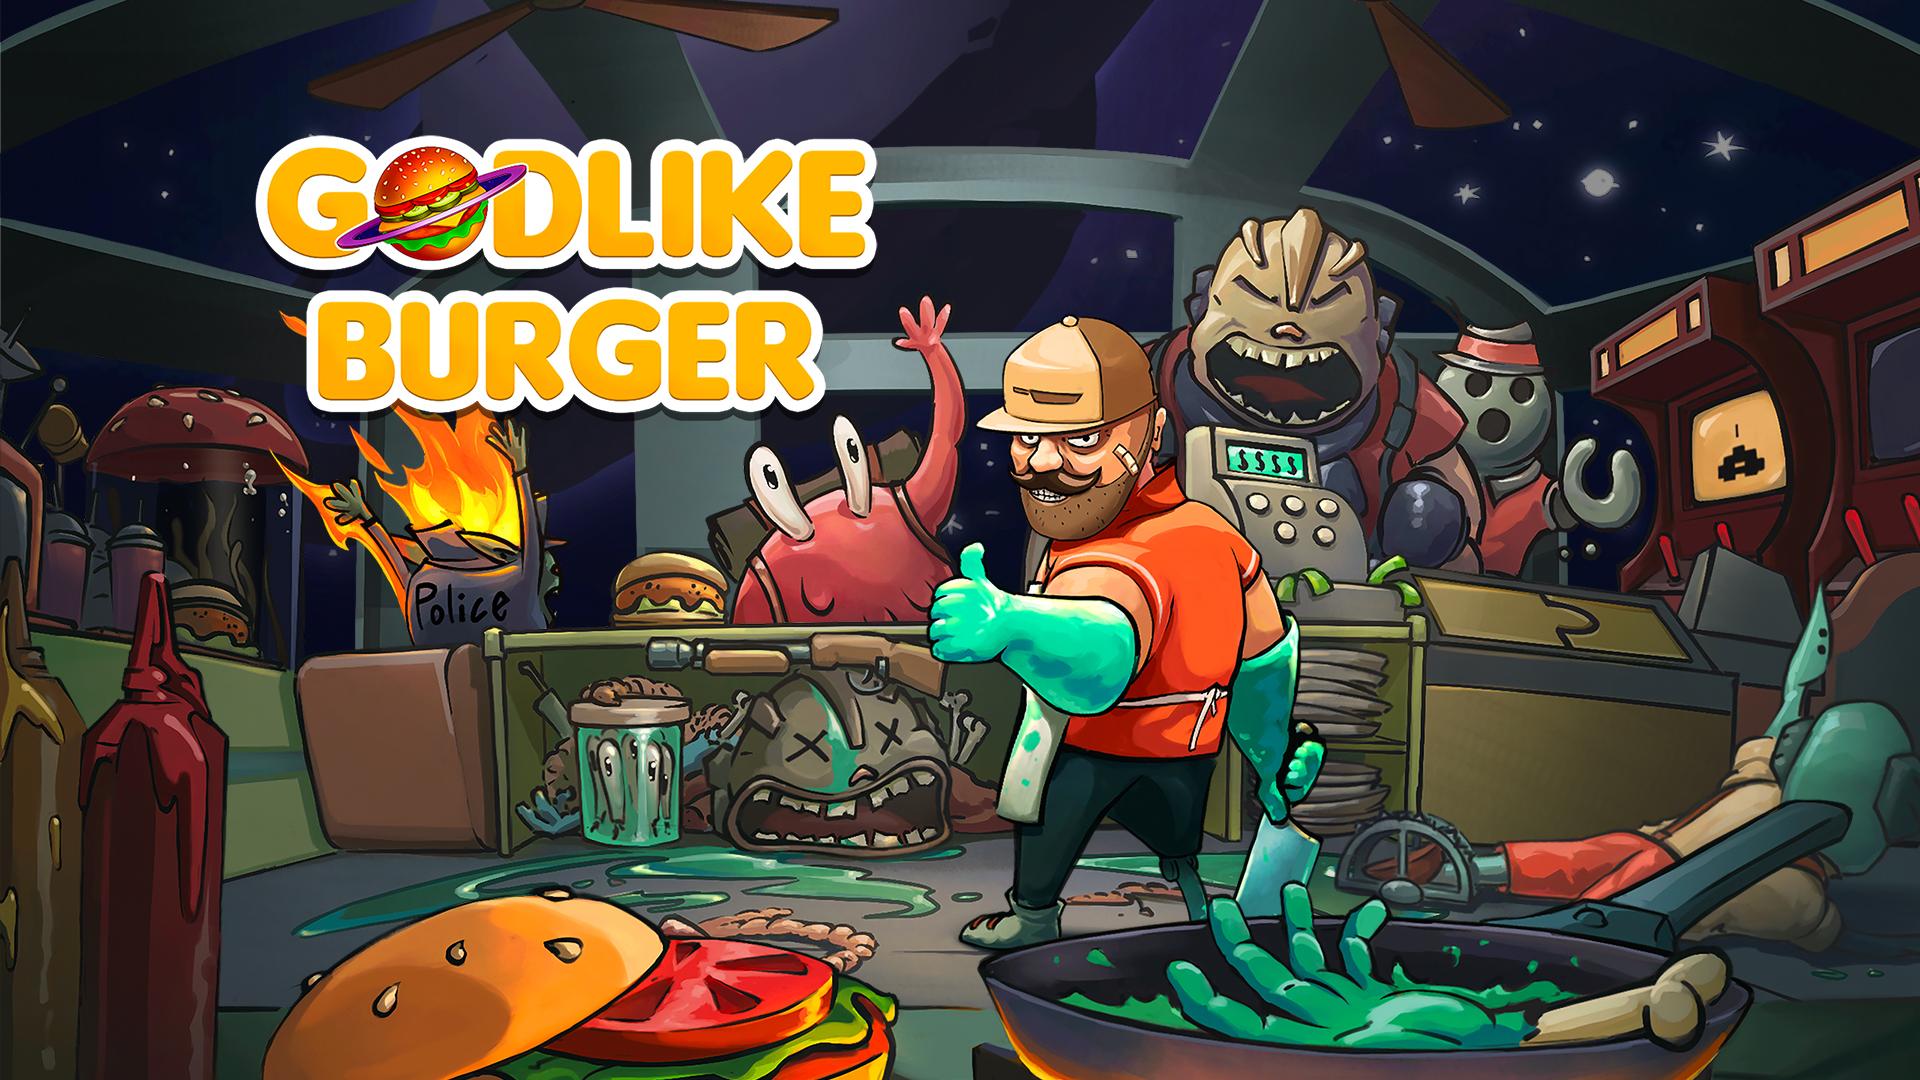 Oficiálny obrázok z hry Godlike Burger.